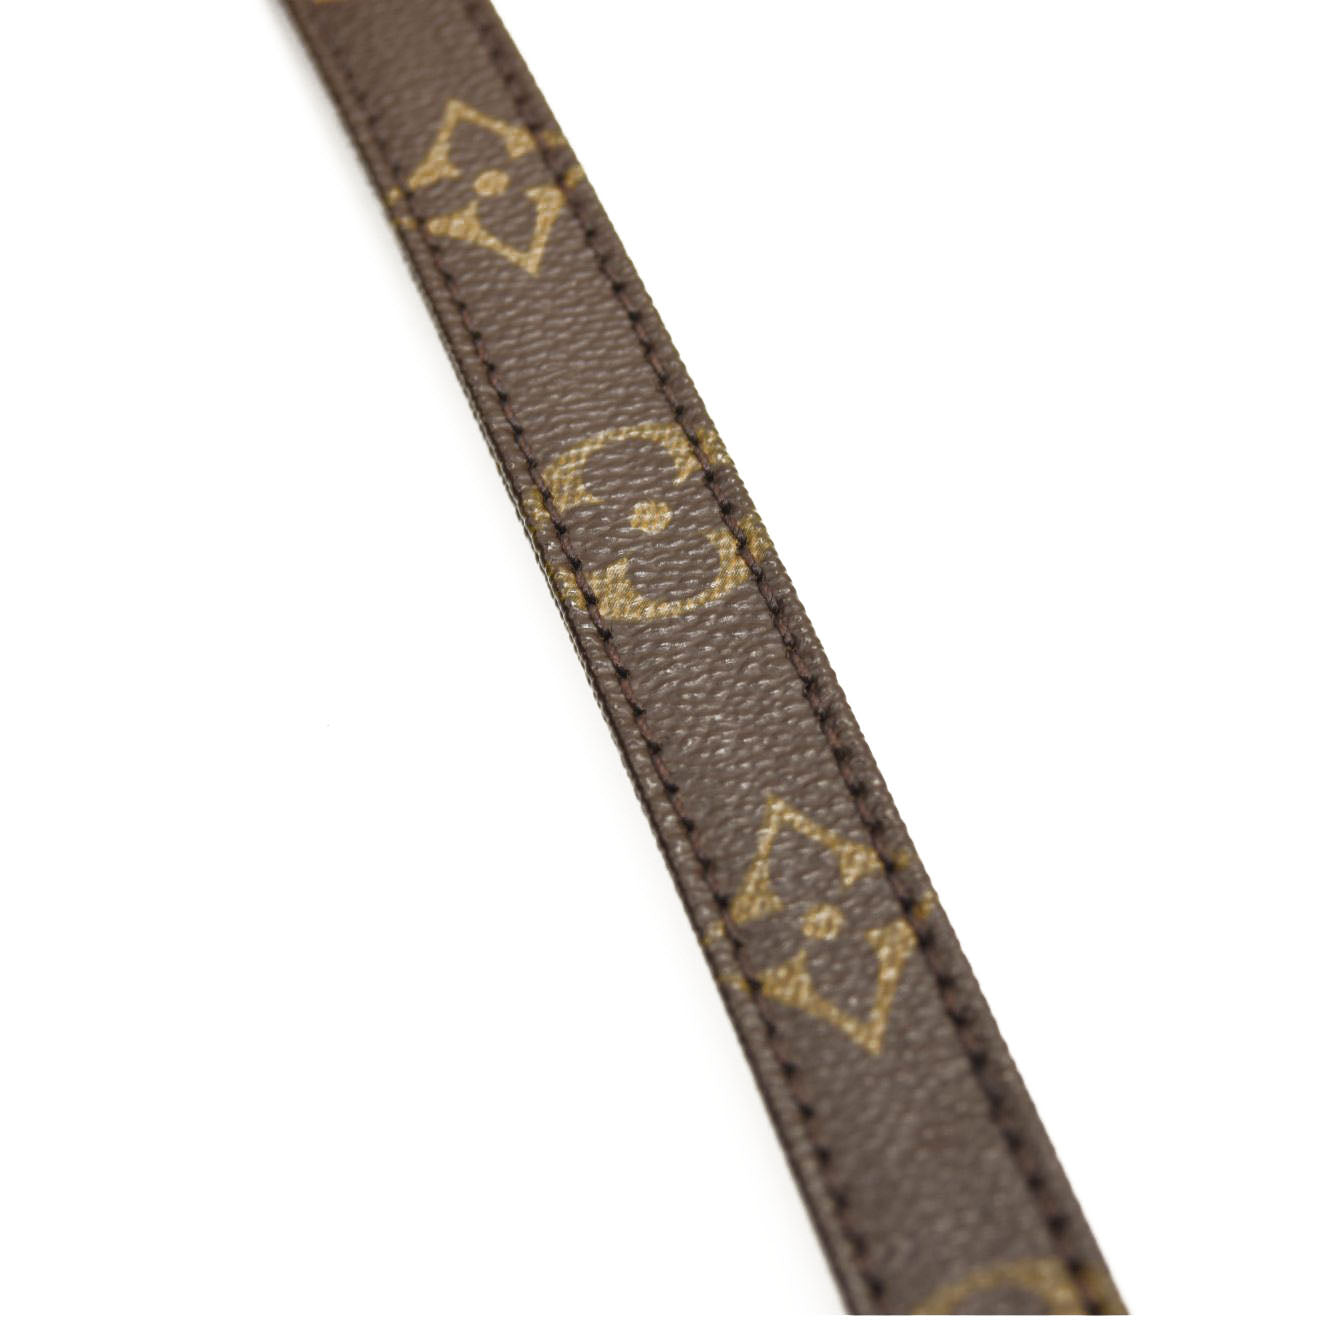 Louis Vuitton Monogram Strap Monogram Adjustable Shoulder Strap